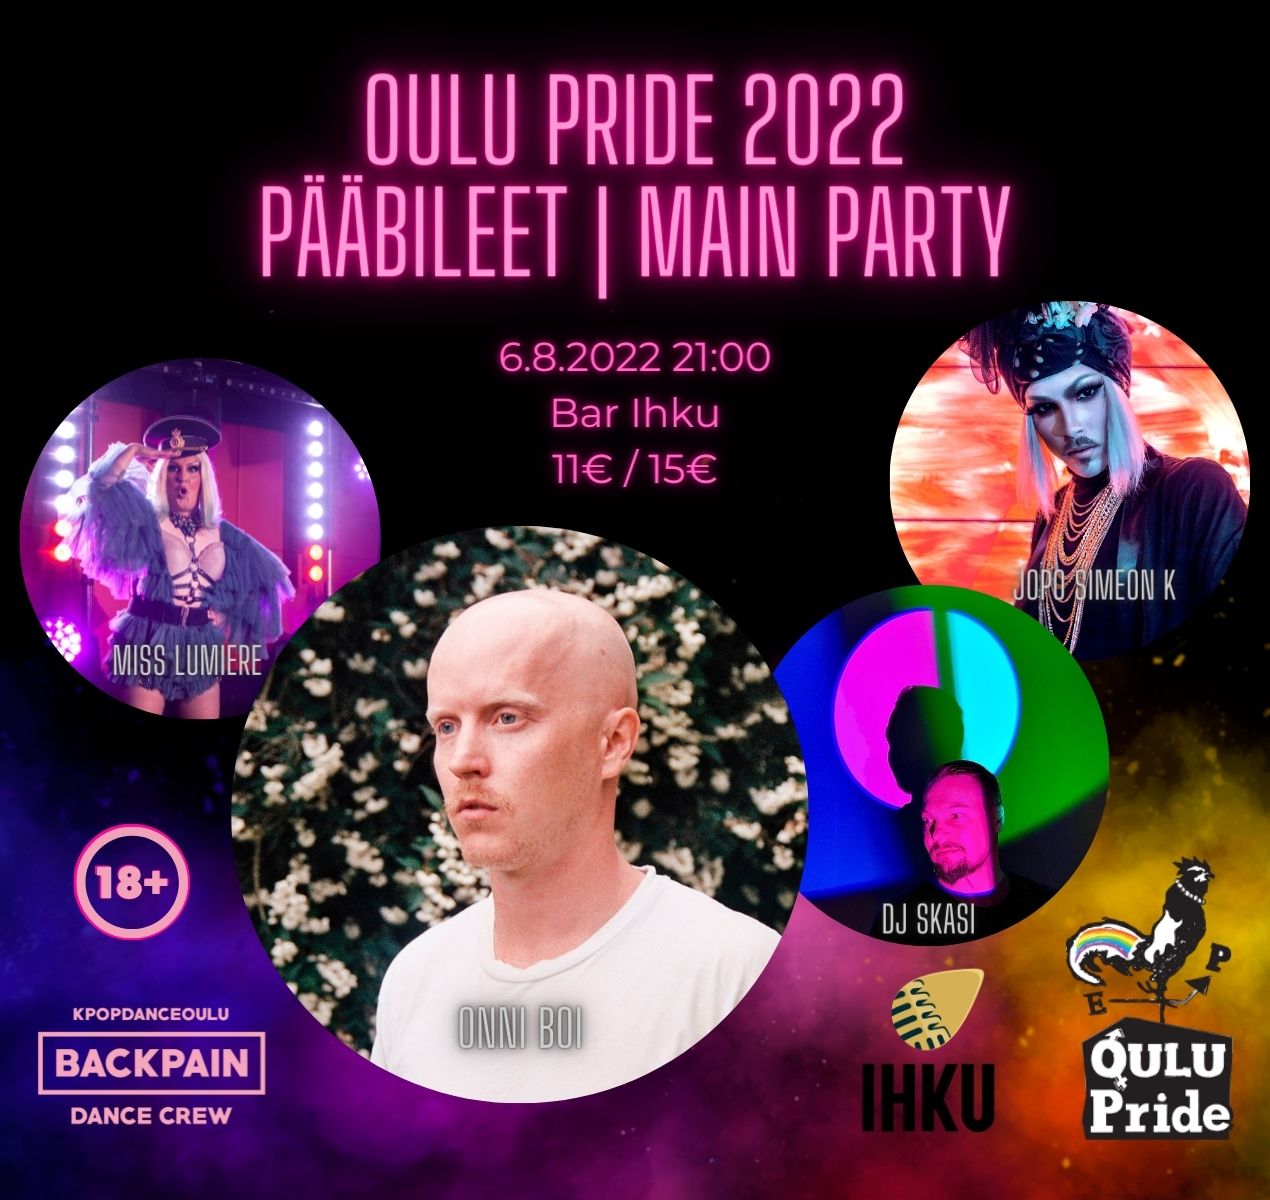 Oulu Pride 2022 Pääbileet | Main Party, 6.8.2022 21:00 Bar Ihku, 11€/15€. Miss Lumiere, Onni Boi, DJ Skasi, Jopo Simeon K, Backpain Dance Crew. 18+